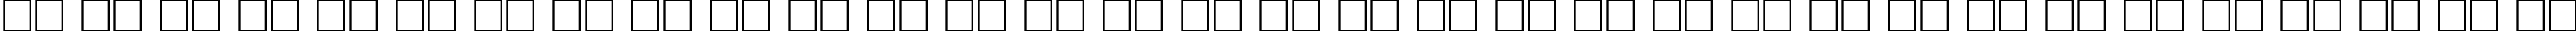 Пример написания русского алфавита шрифтом Didona